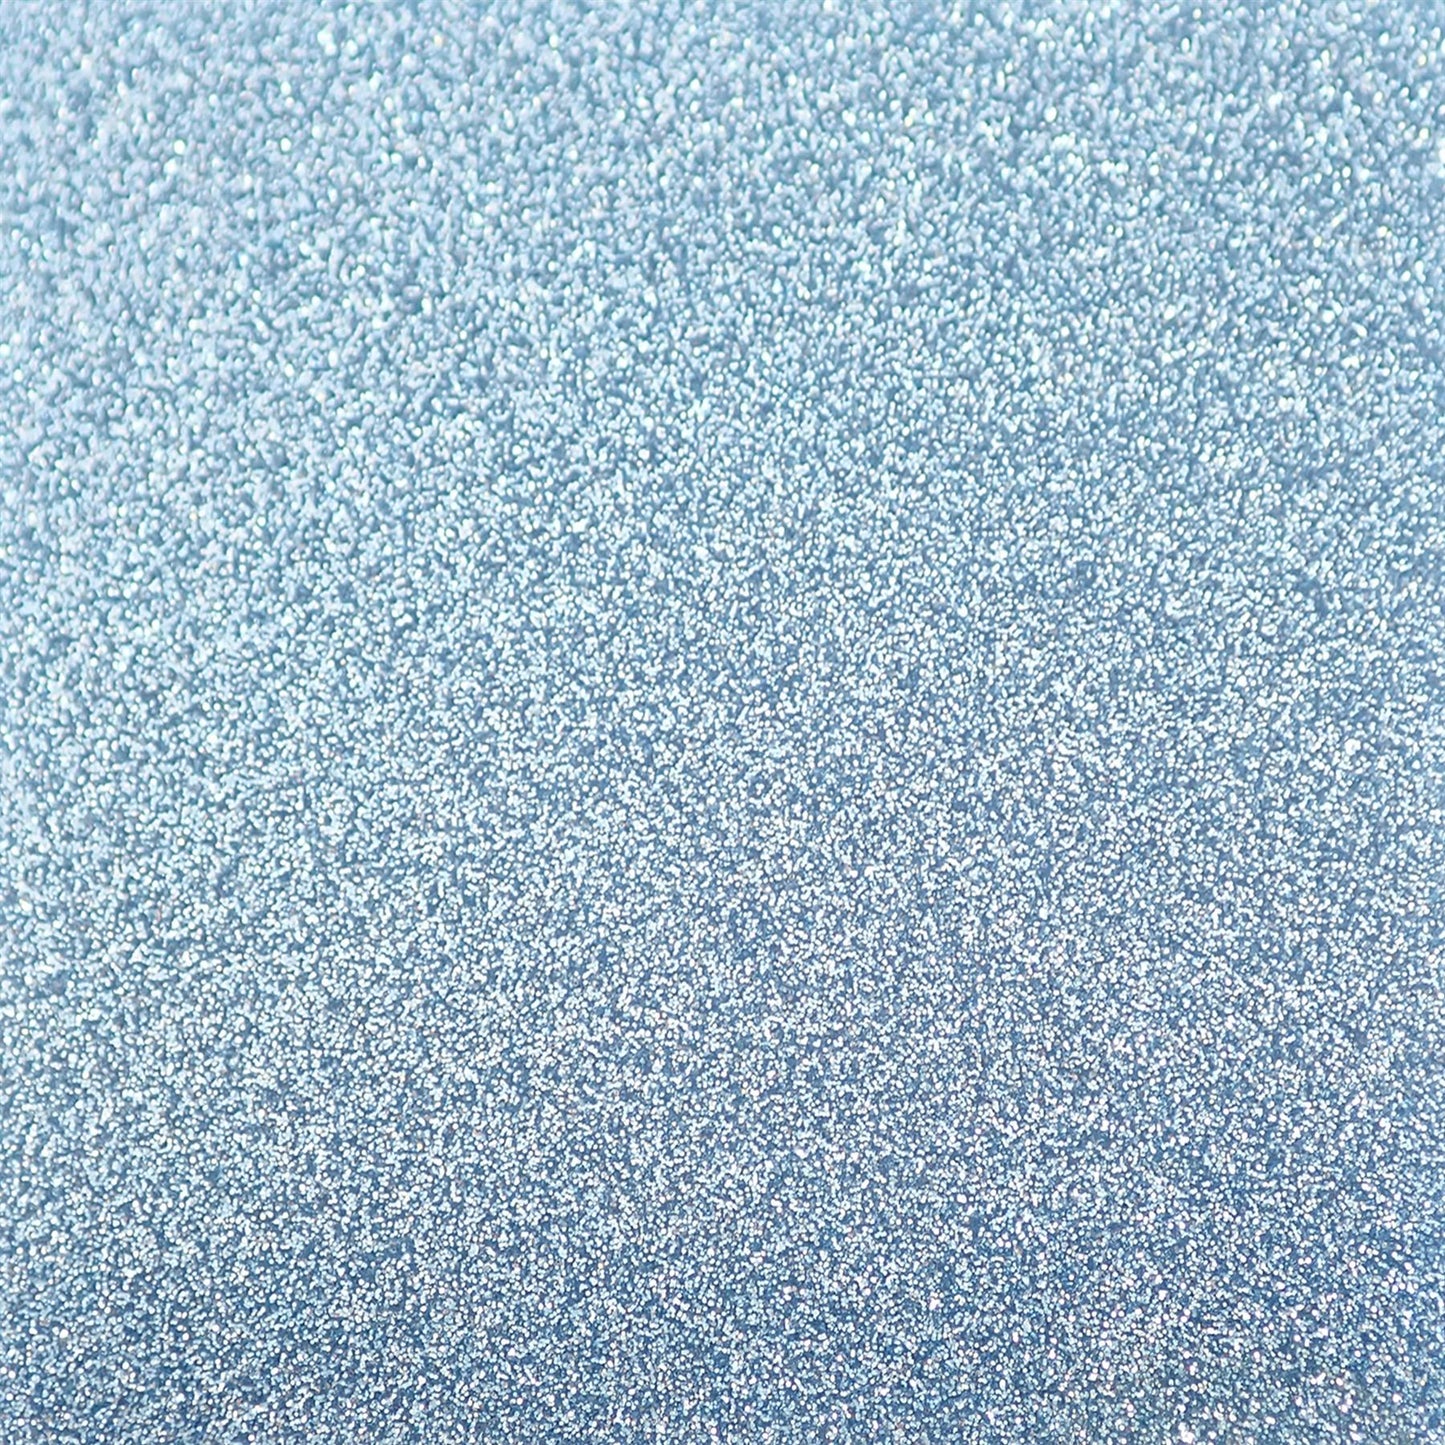 Incudo Baby Blue 2-Sided Glitter Acrylic Sheet - Sample